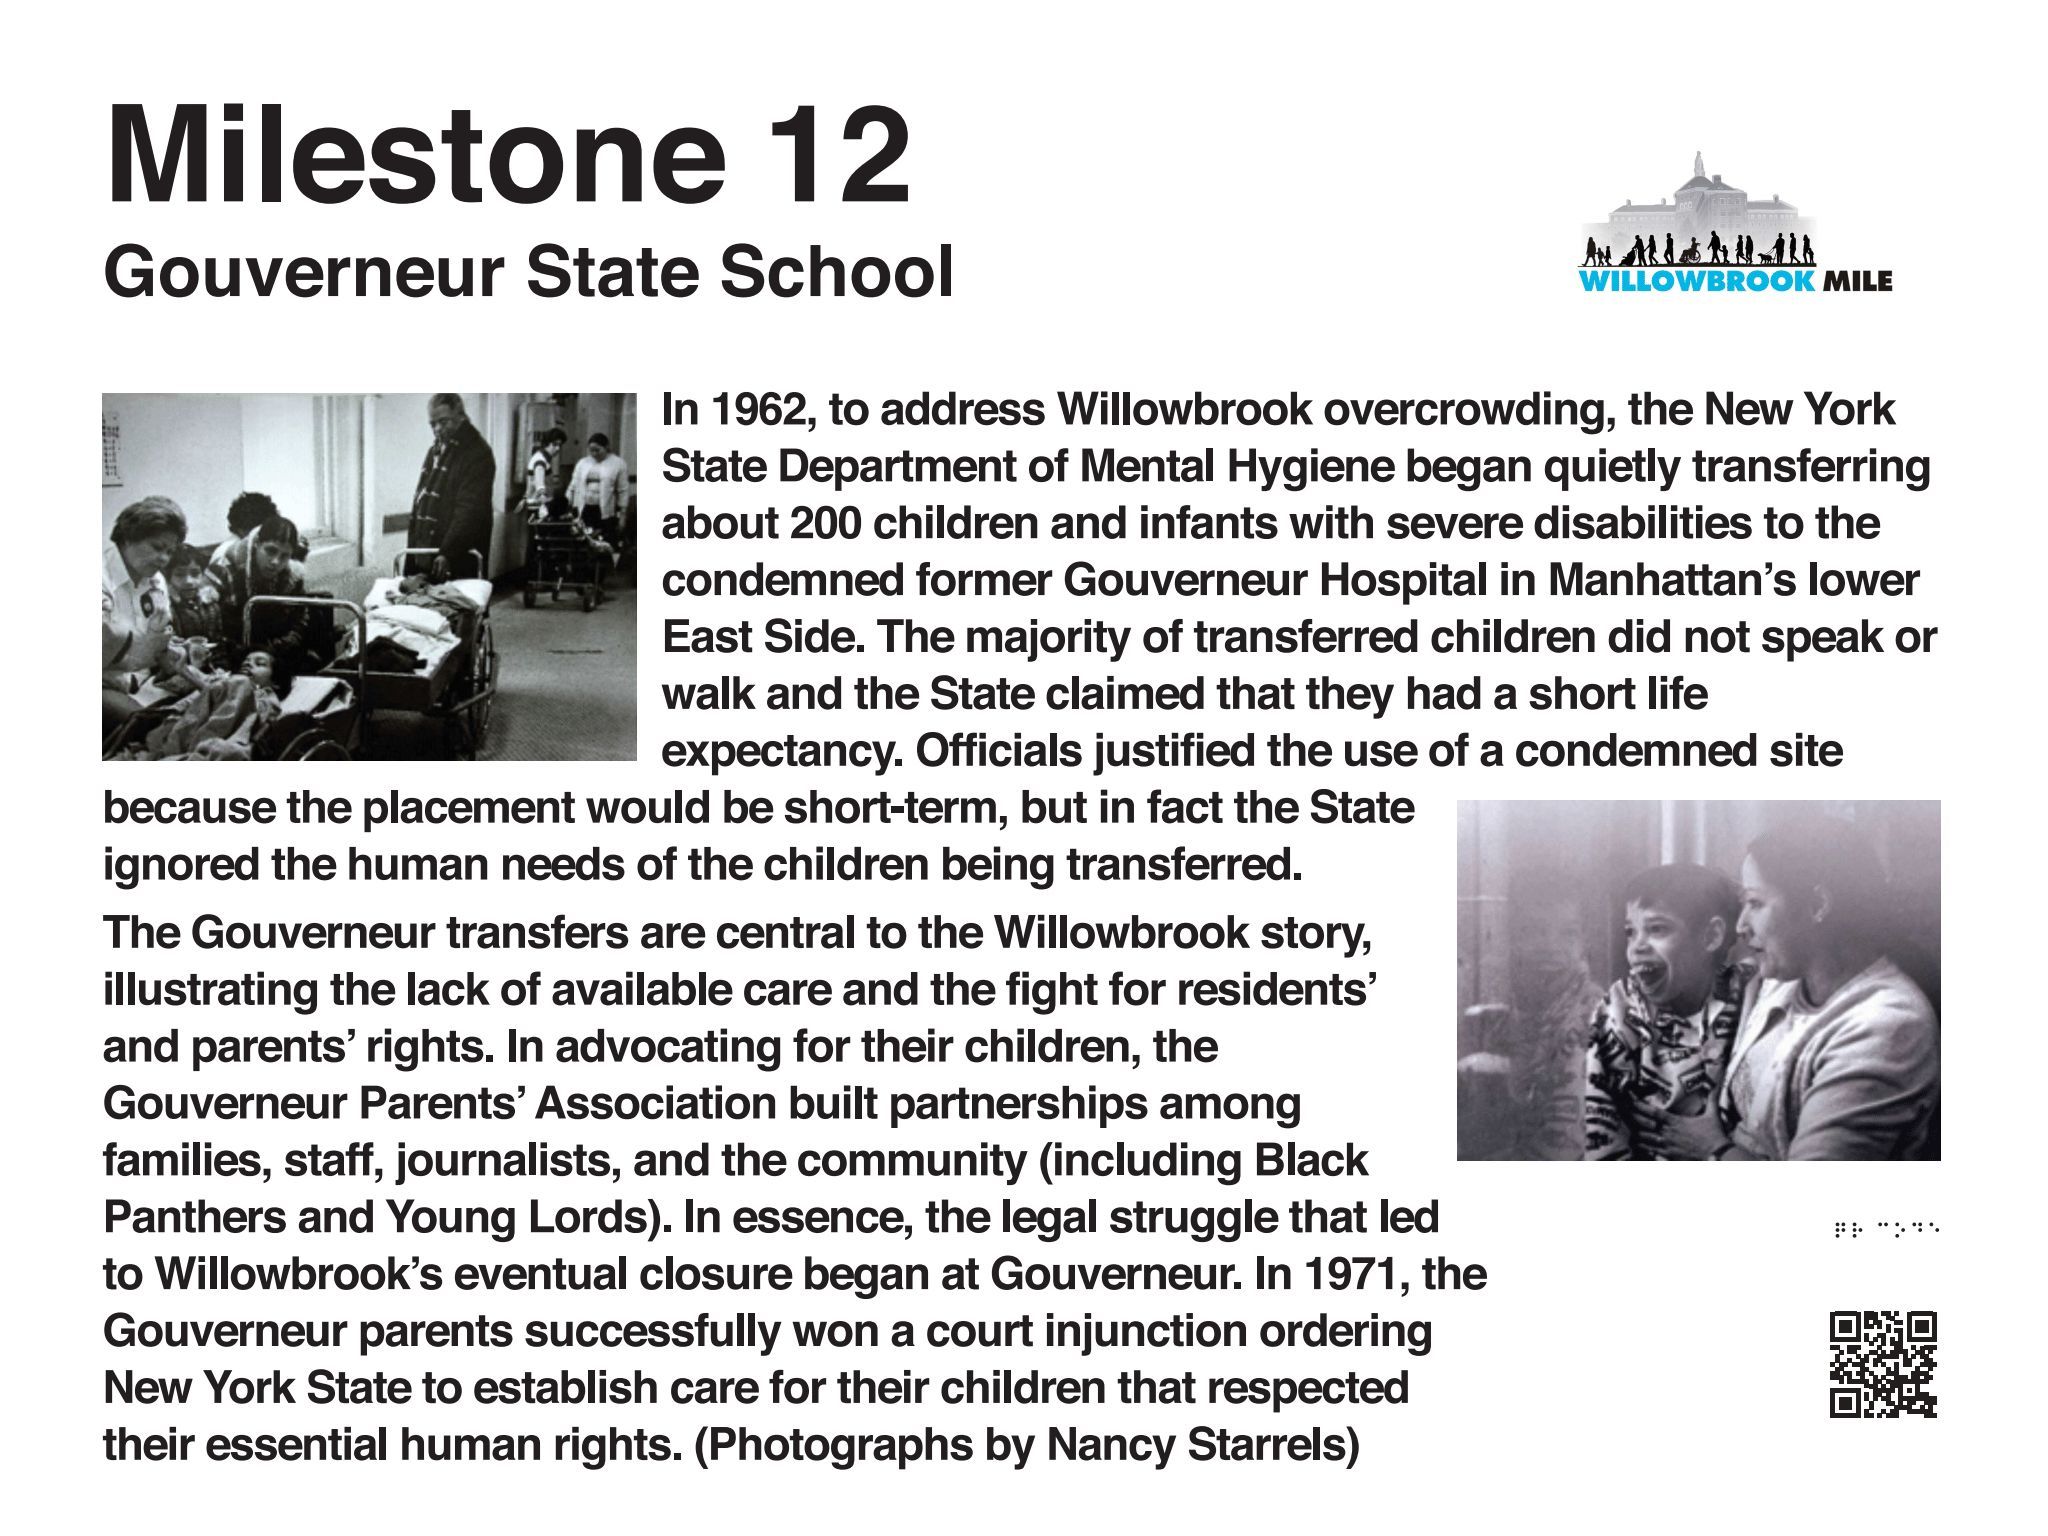 Milestone 12 - Gouverneur State School